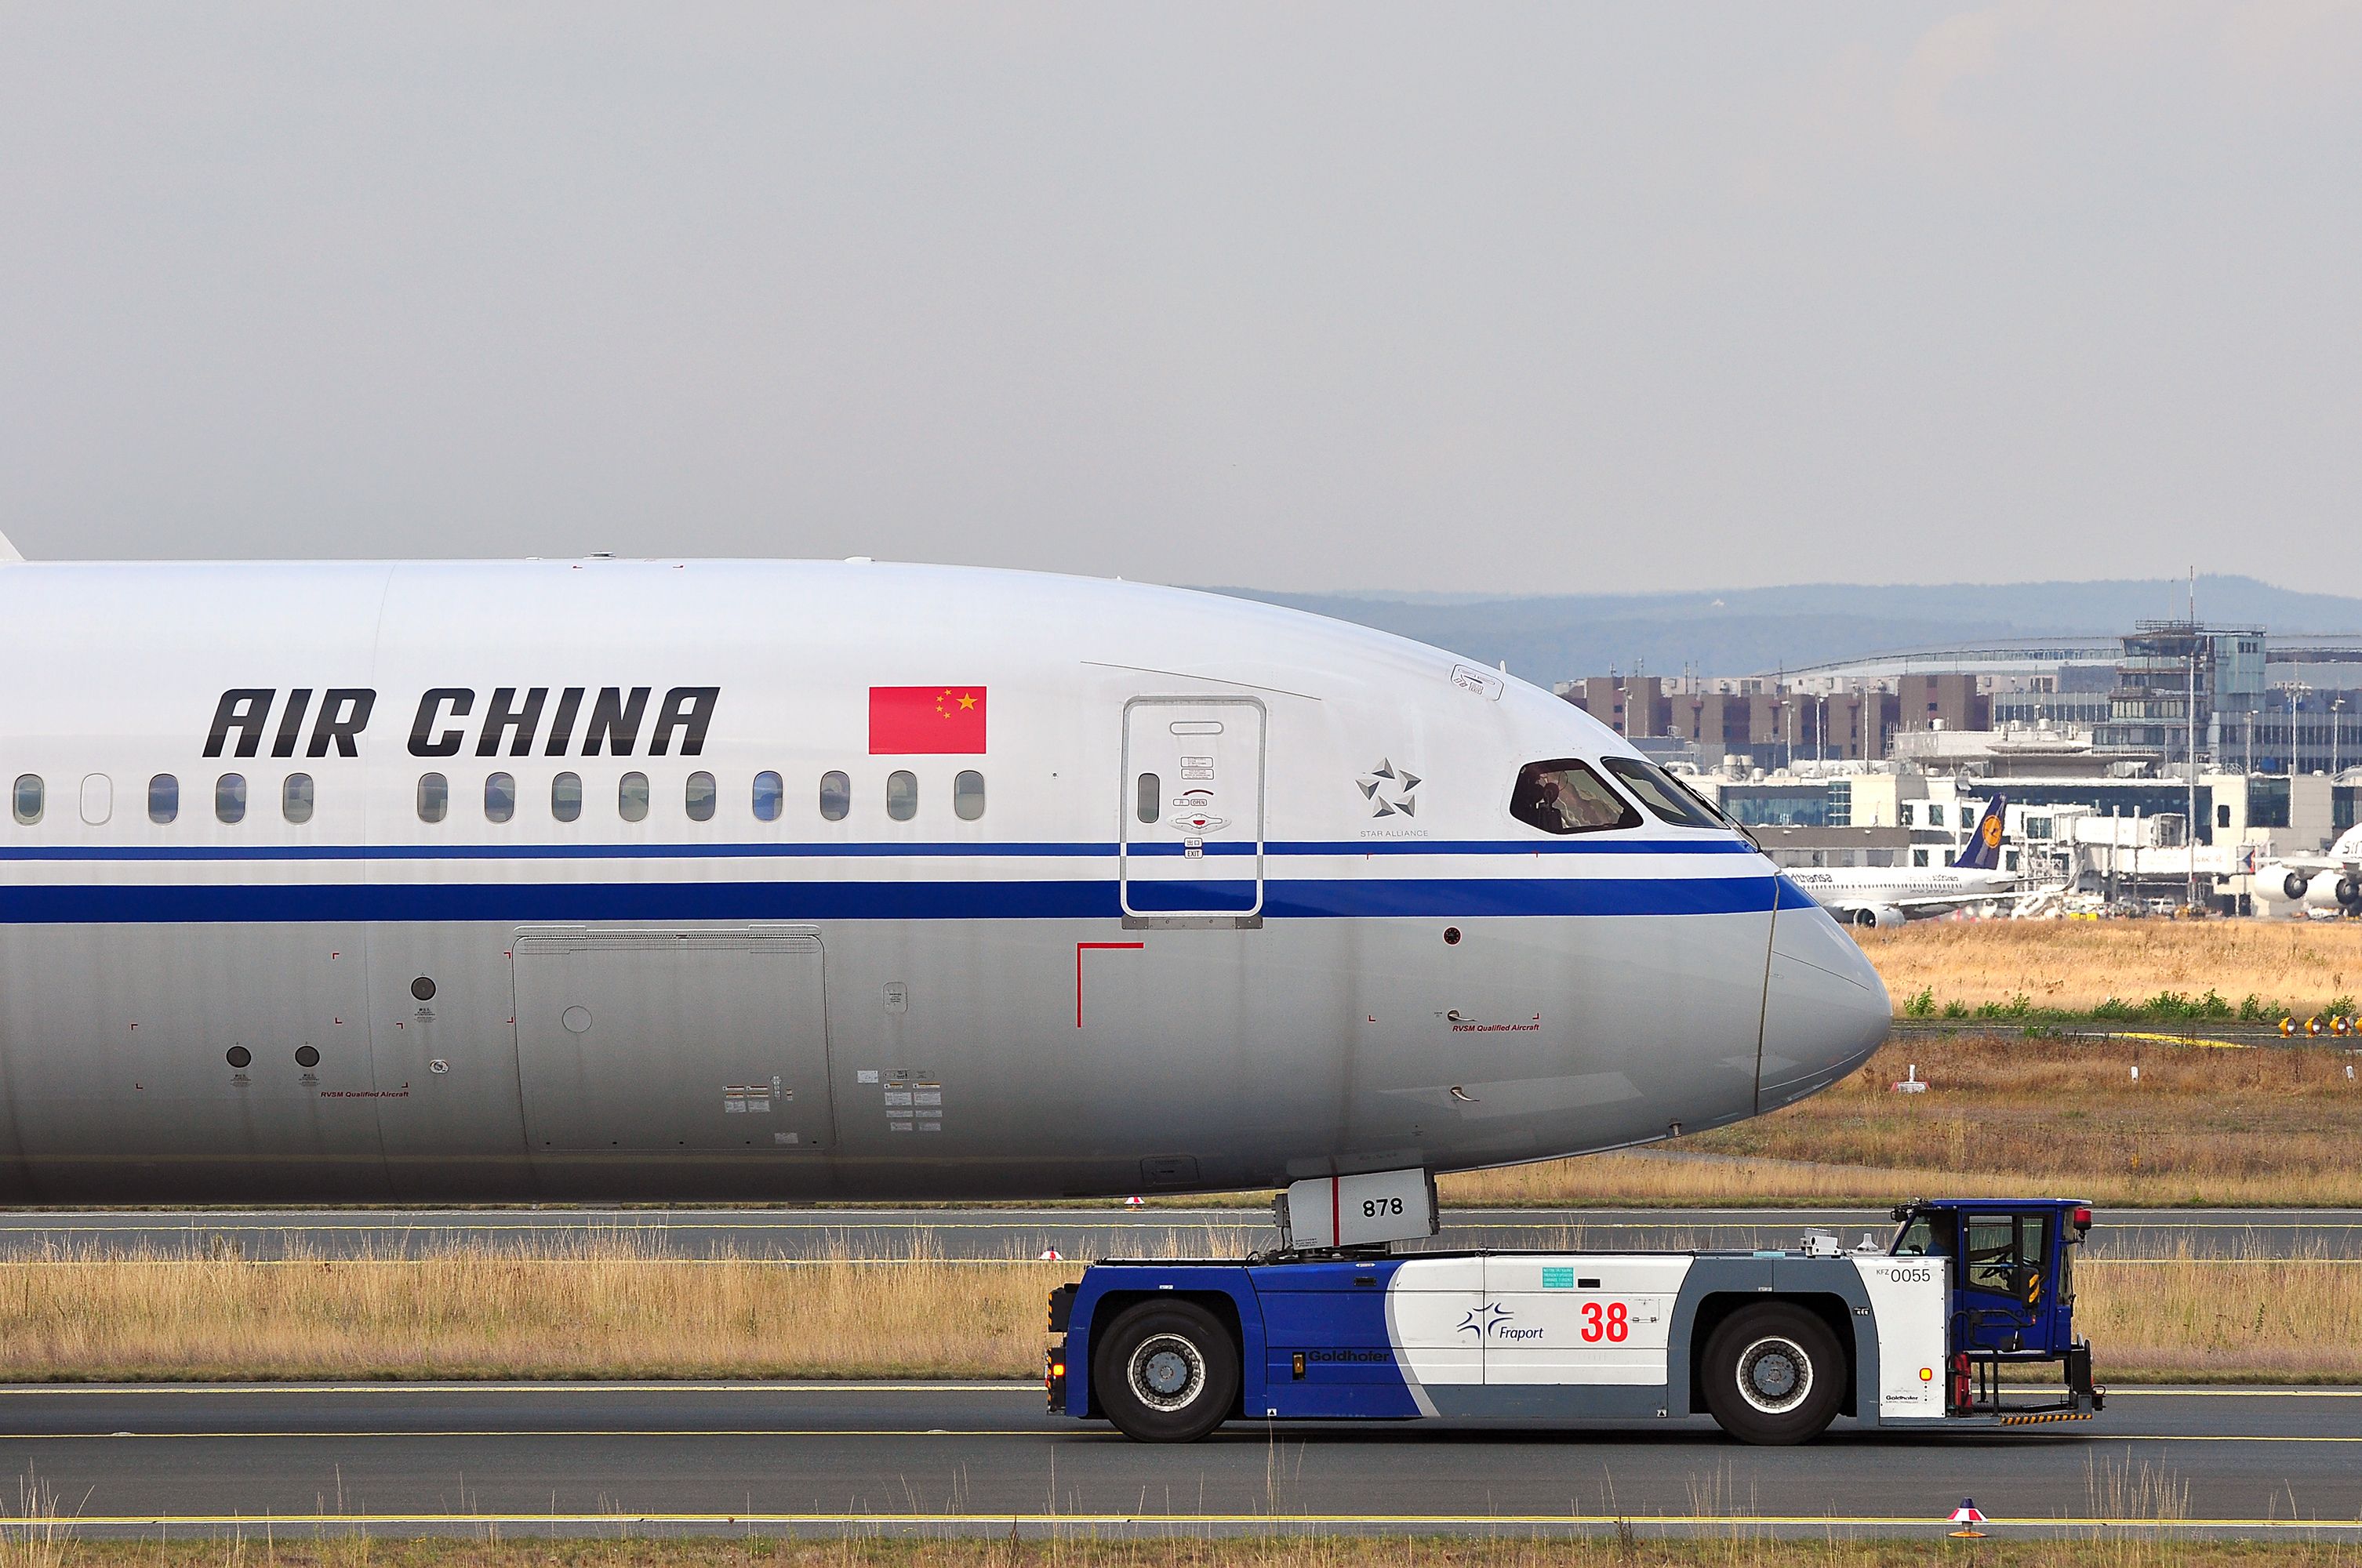 Air China Boeing 787-9 in Frankfurt airport